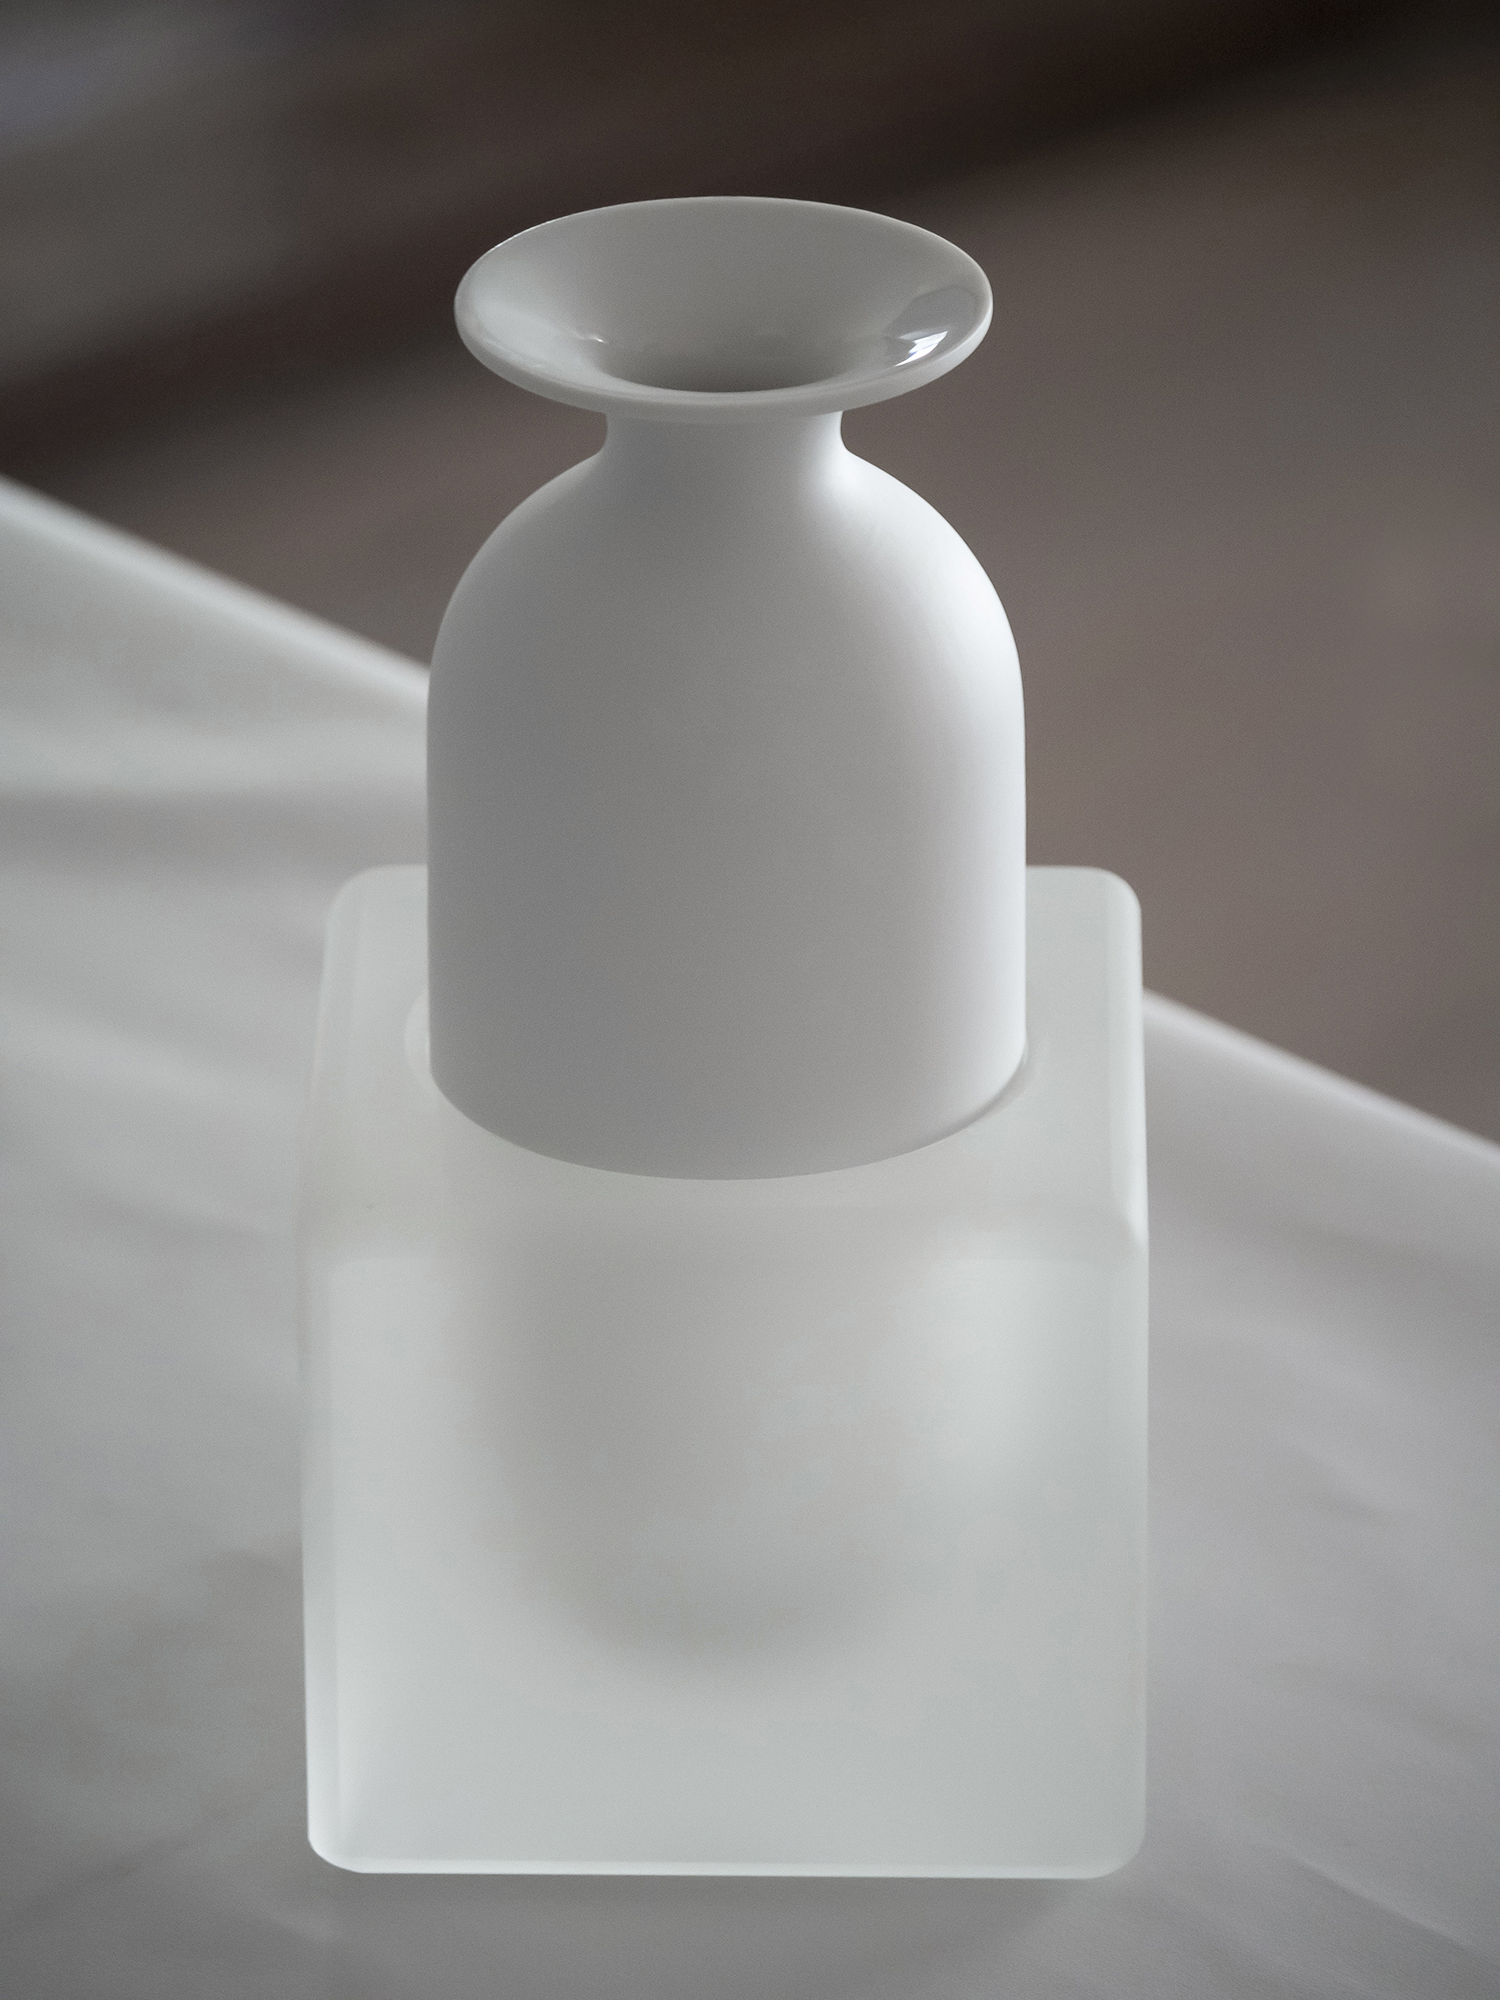 Freddo vase in white for Rosenthal, designed by Debiasi Sandri